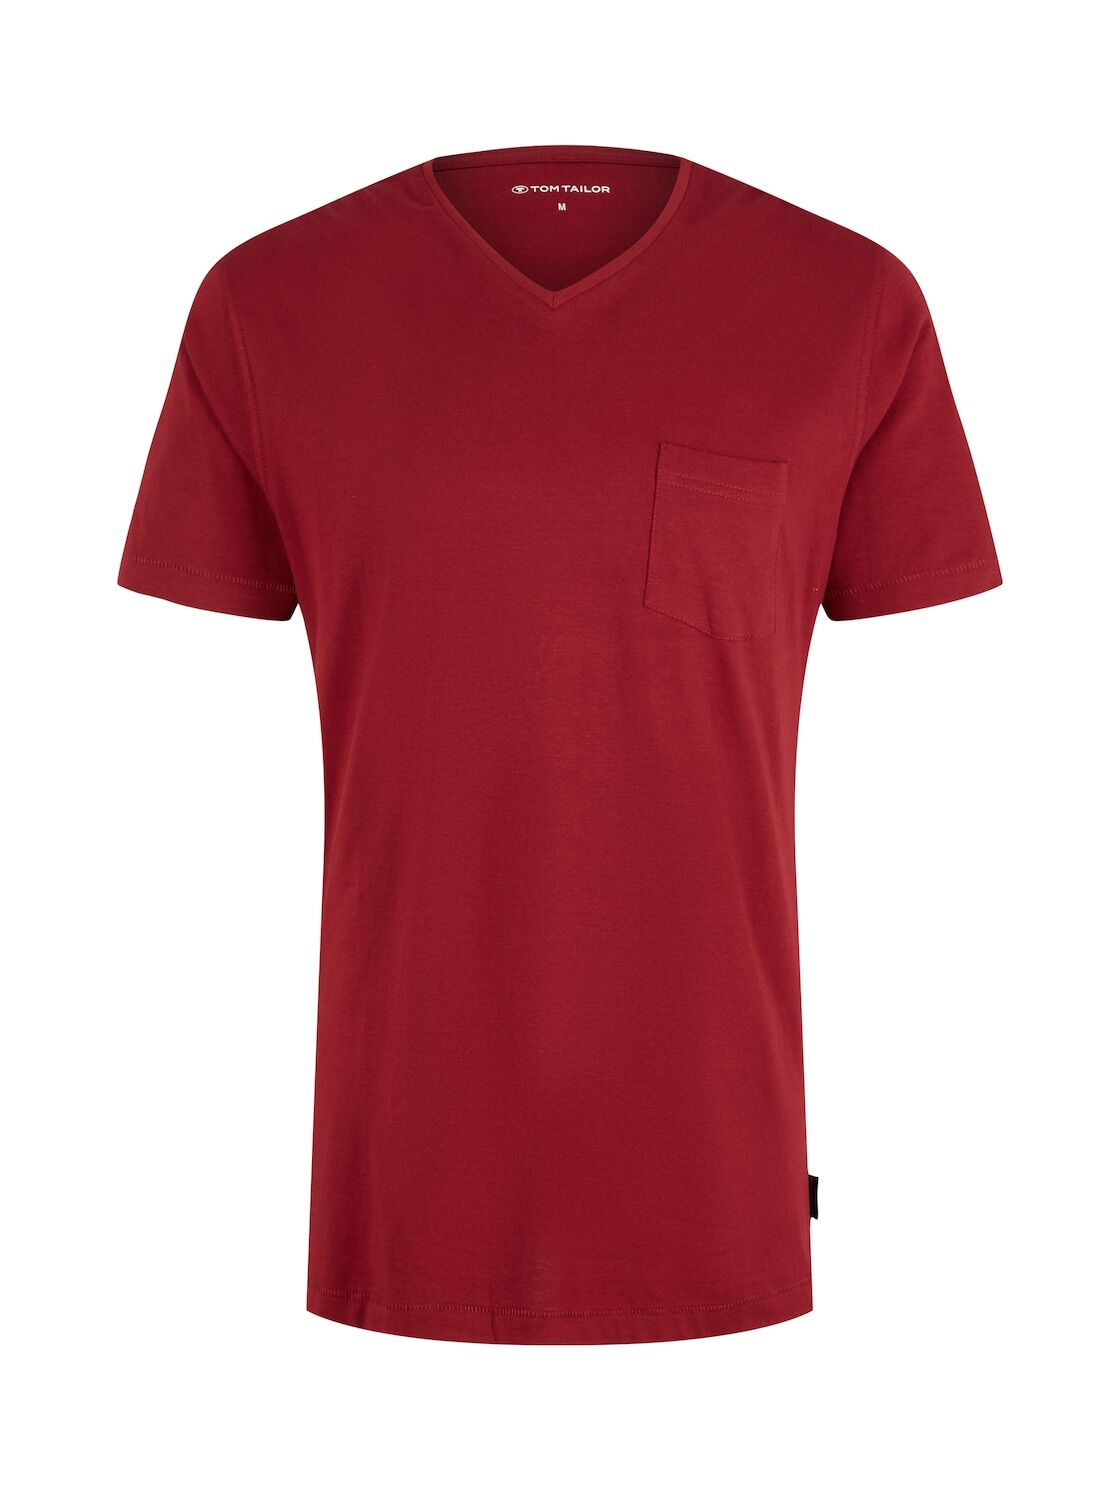 TOM TAILOR Herren Pyjama T-Shirt, rot, unifarben, Gr.48/S